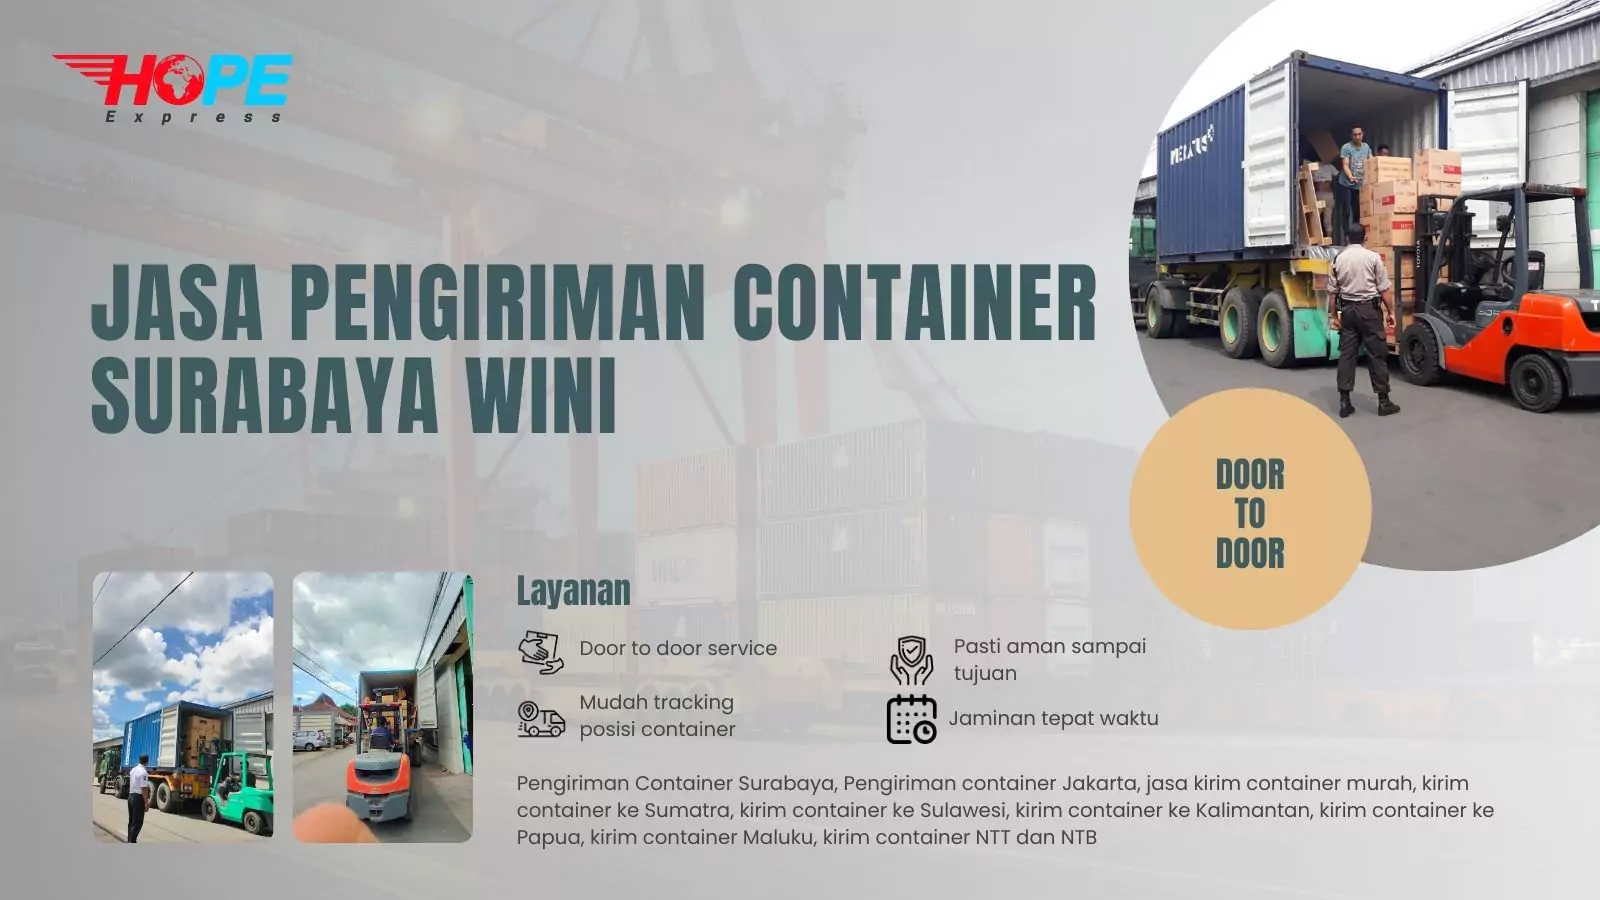 Jasa Pengiriman Container Surabaya Wini